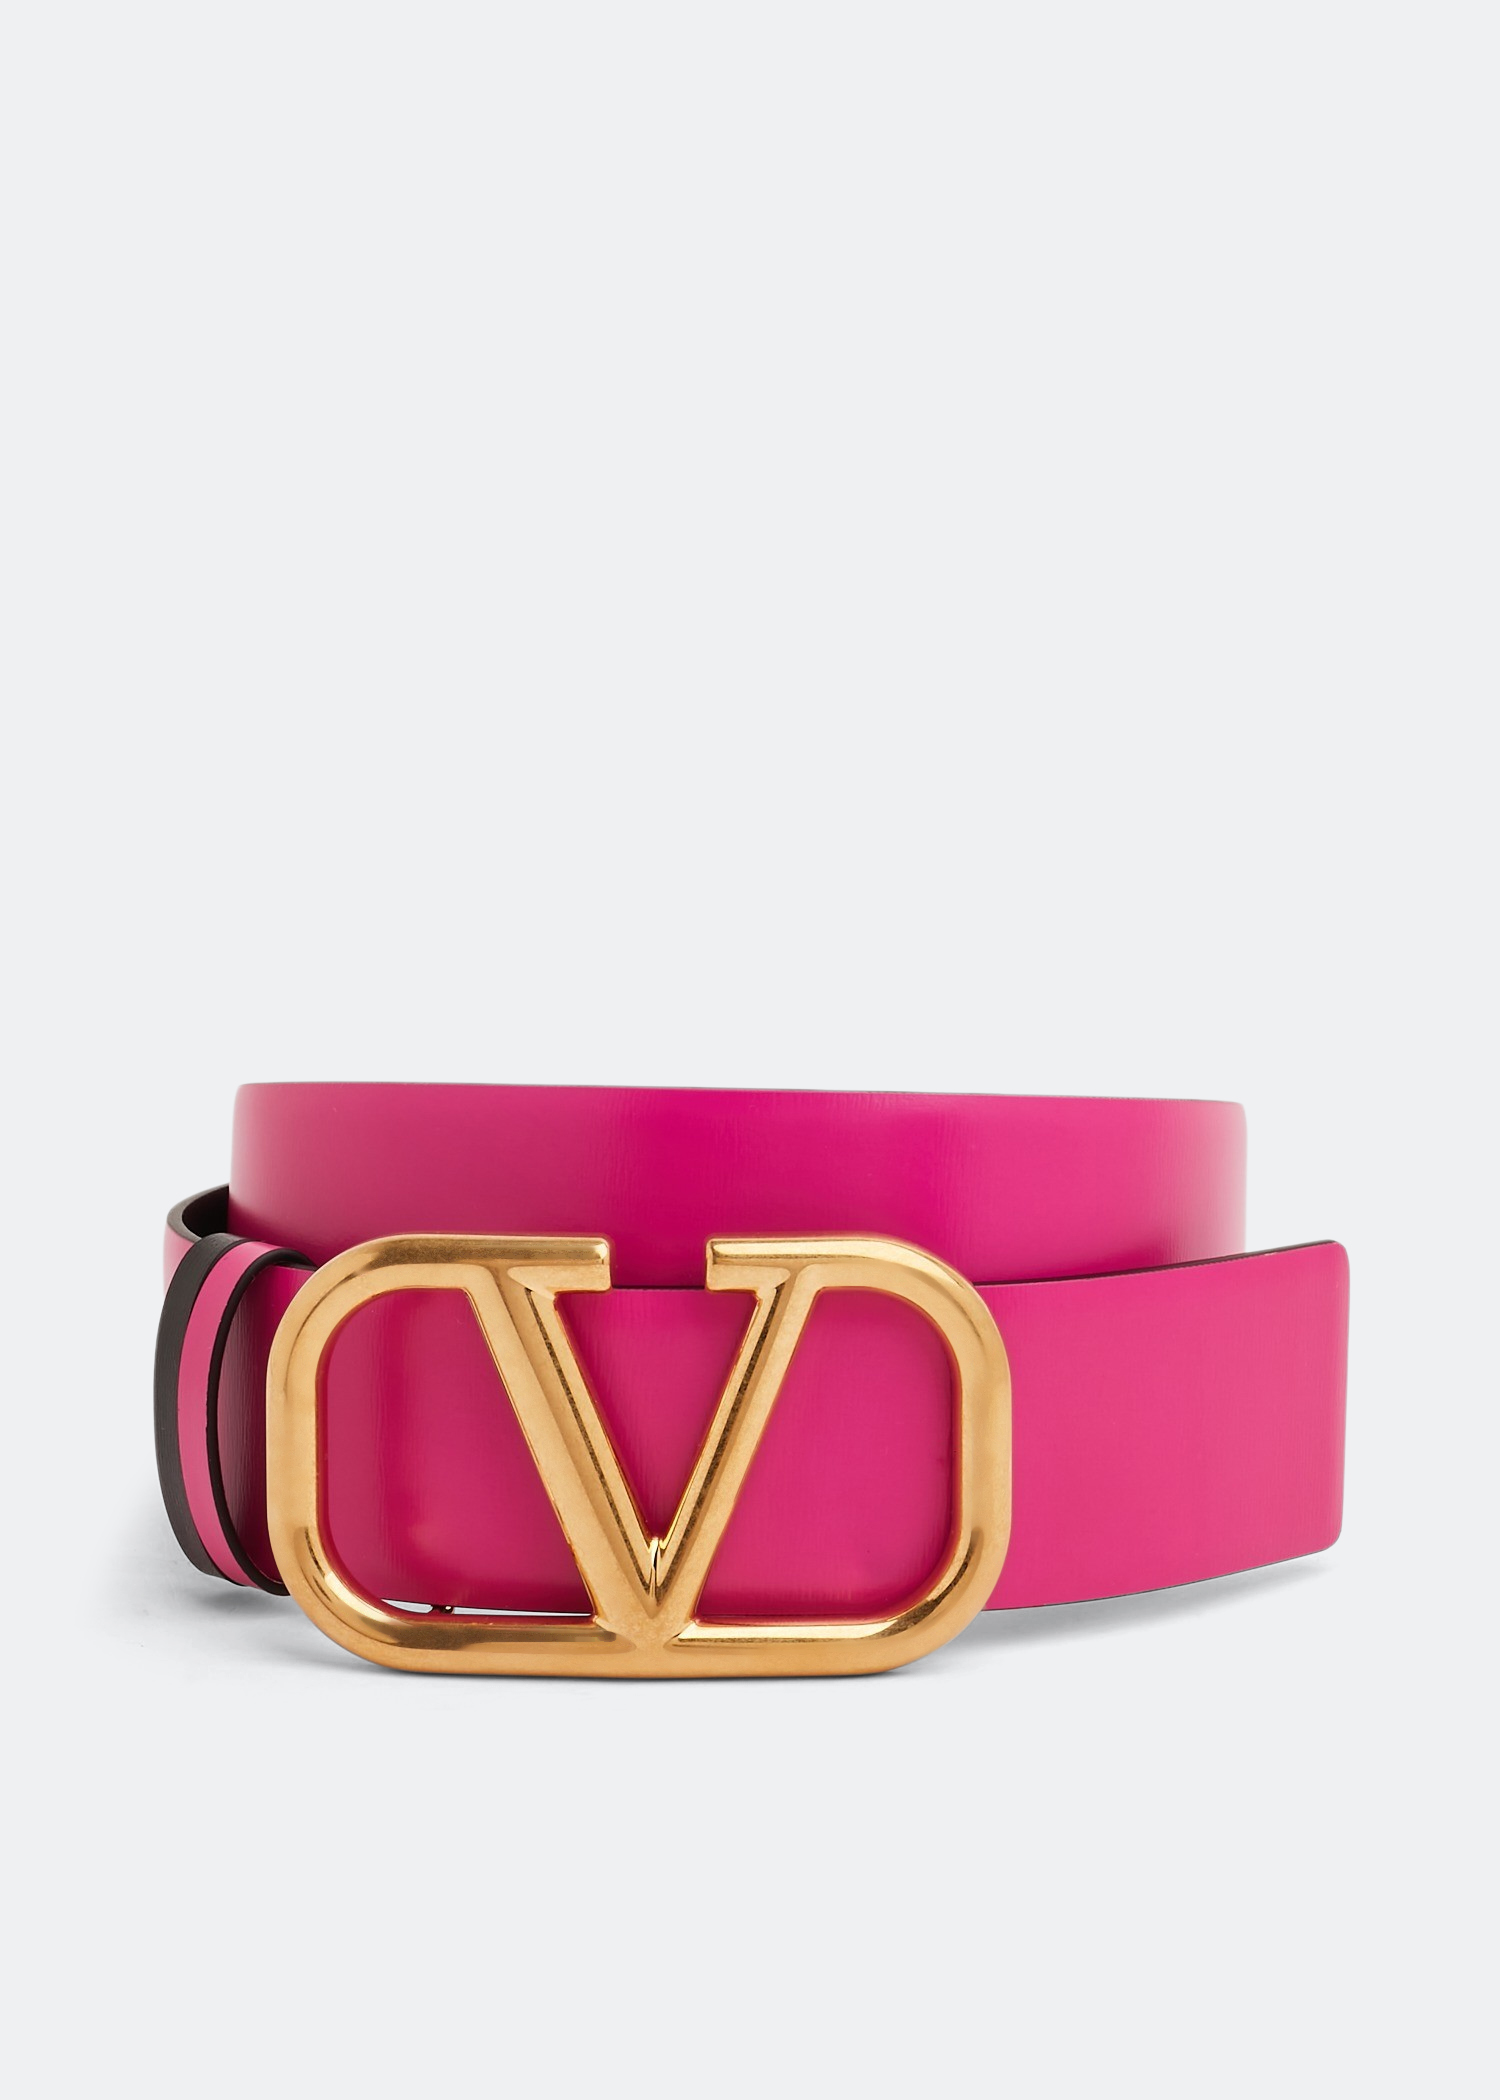 VE310 Tabacco Belt Verthali with Pink Flowers, Cinturones para Mujer